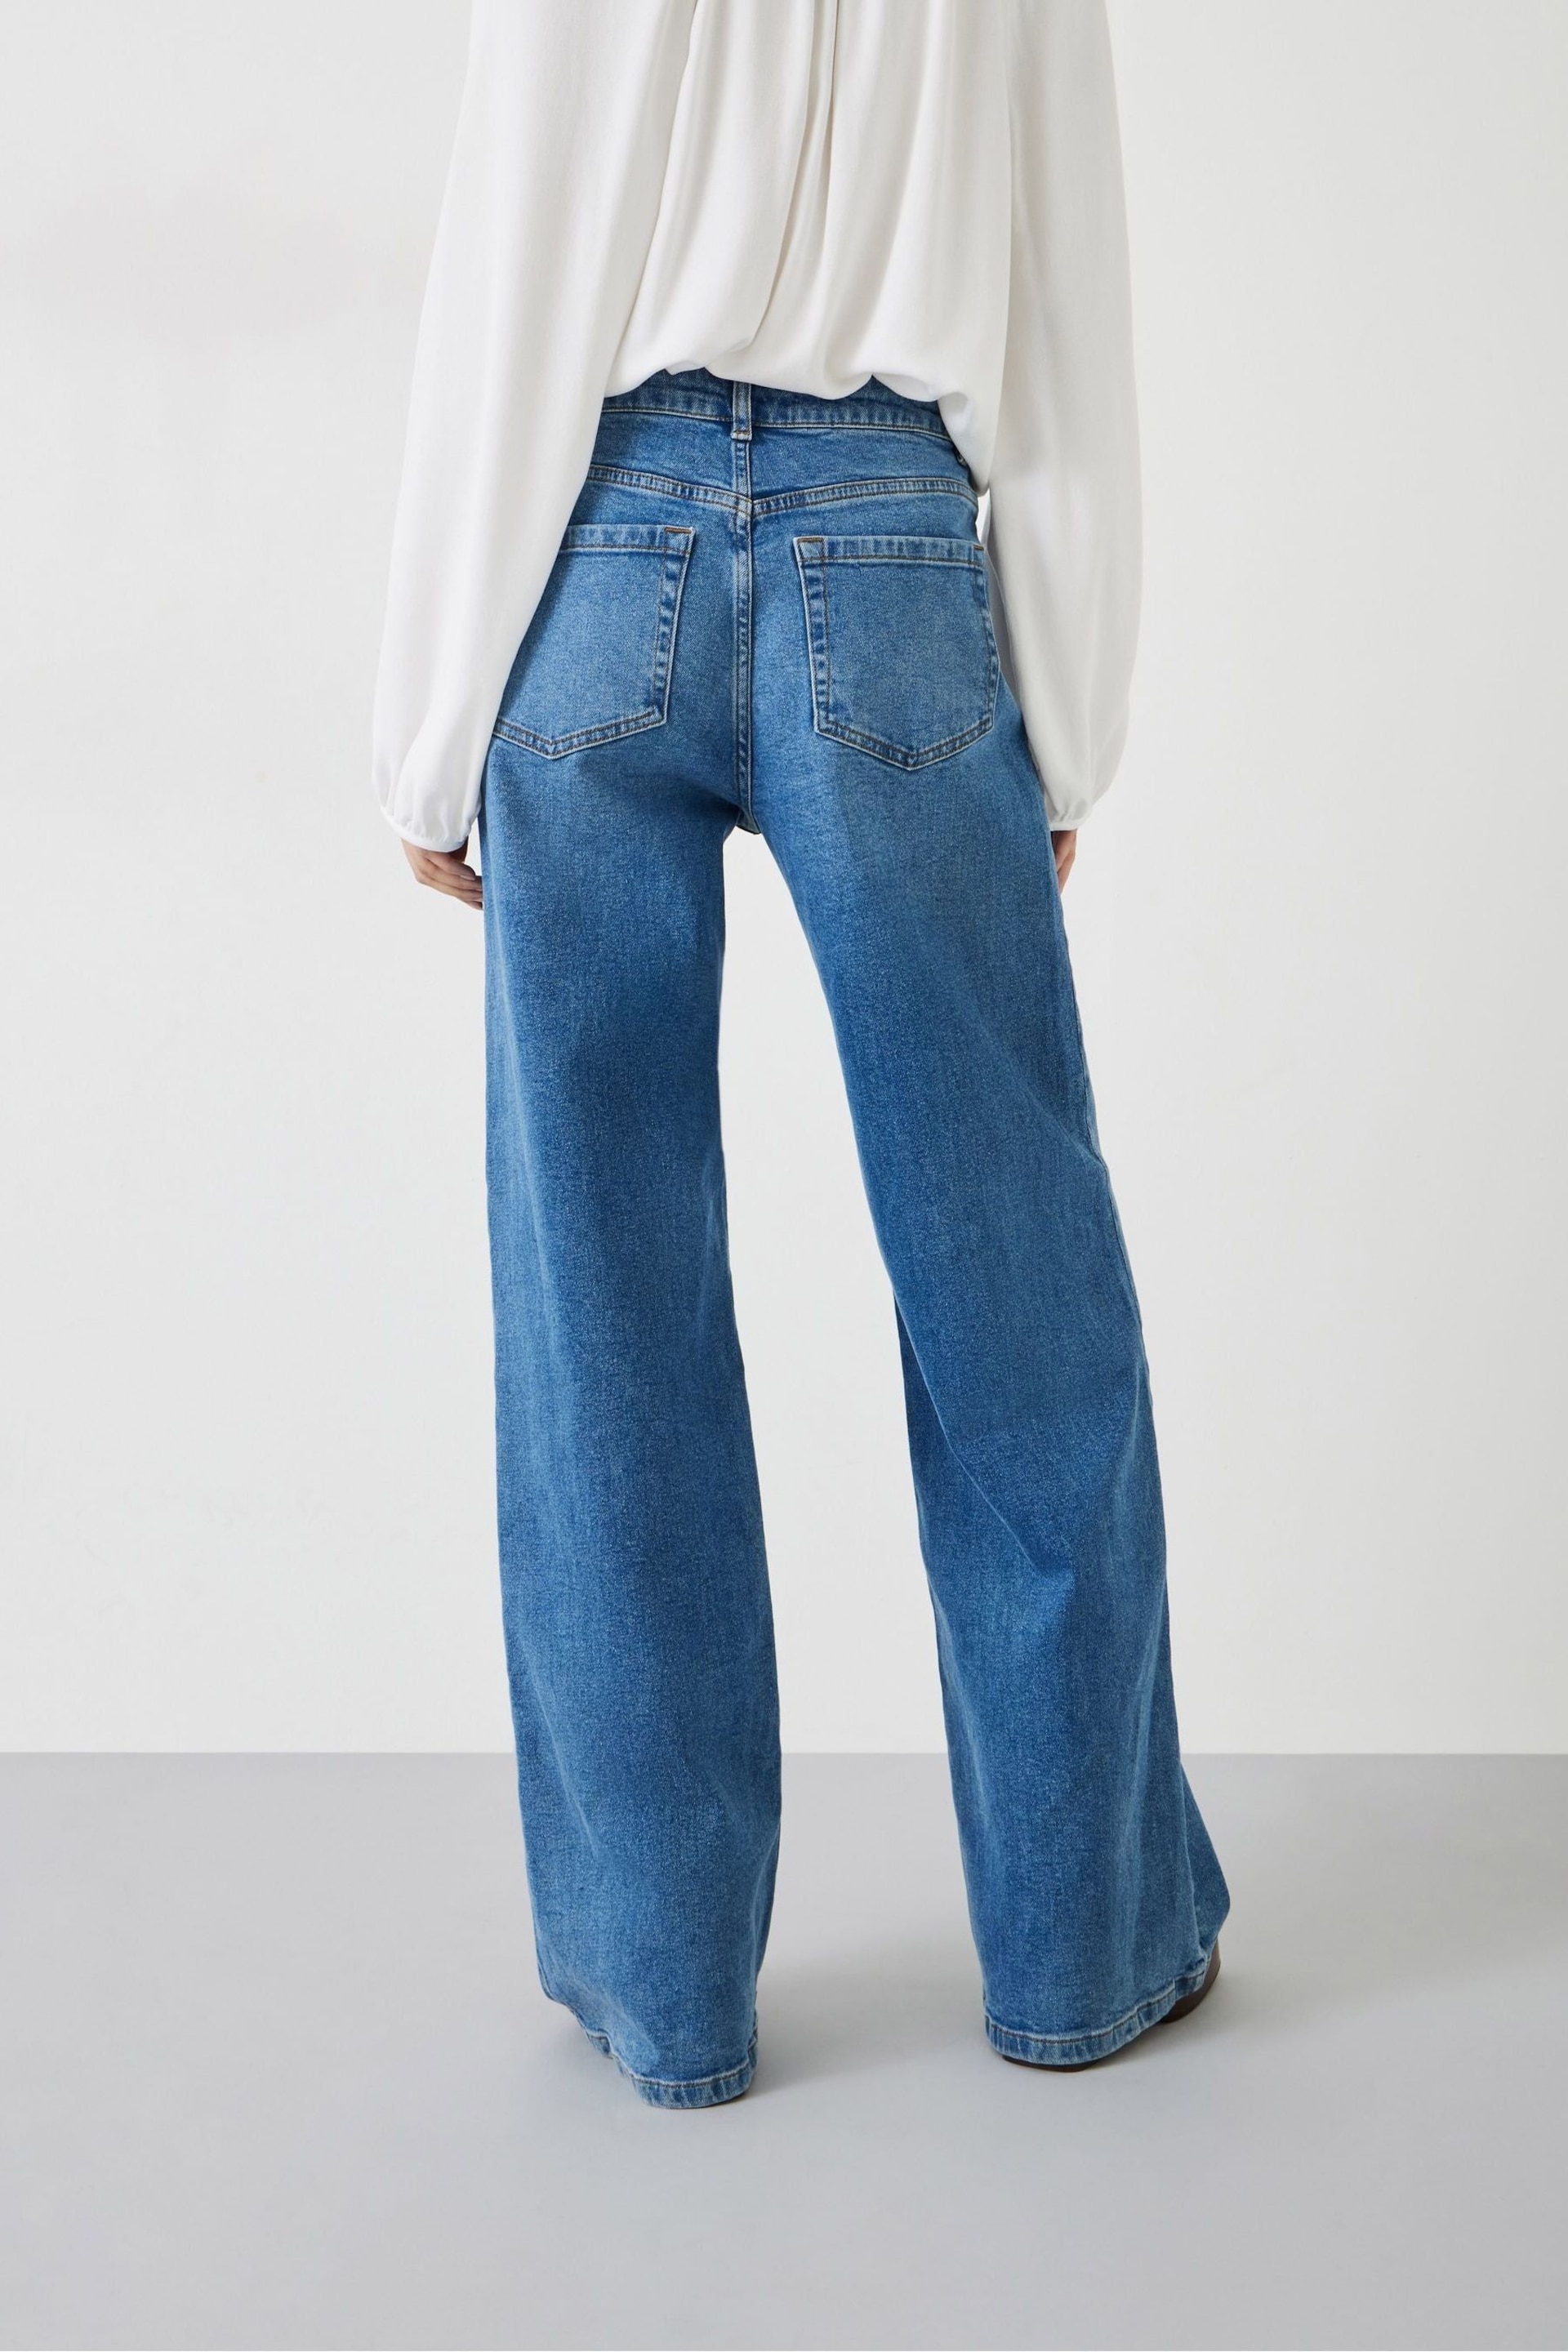 Hush Blue Rowan Flared Jeans - Image 2 of 5